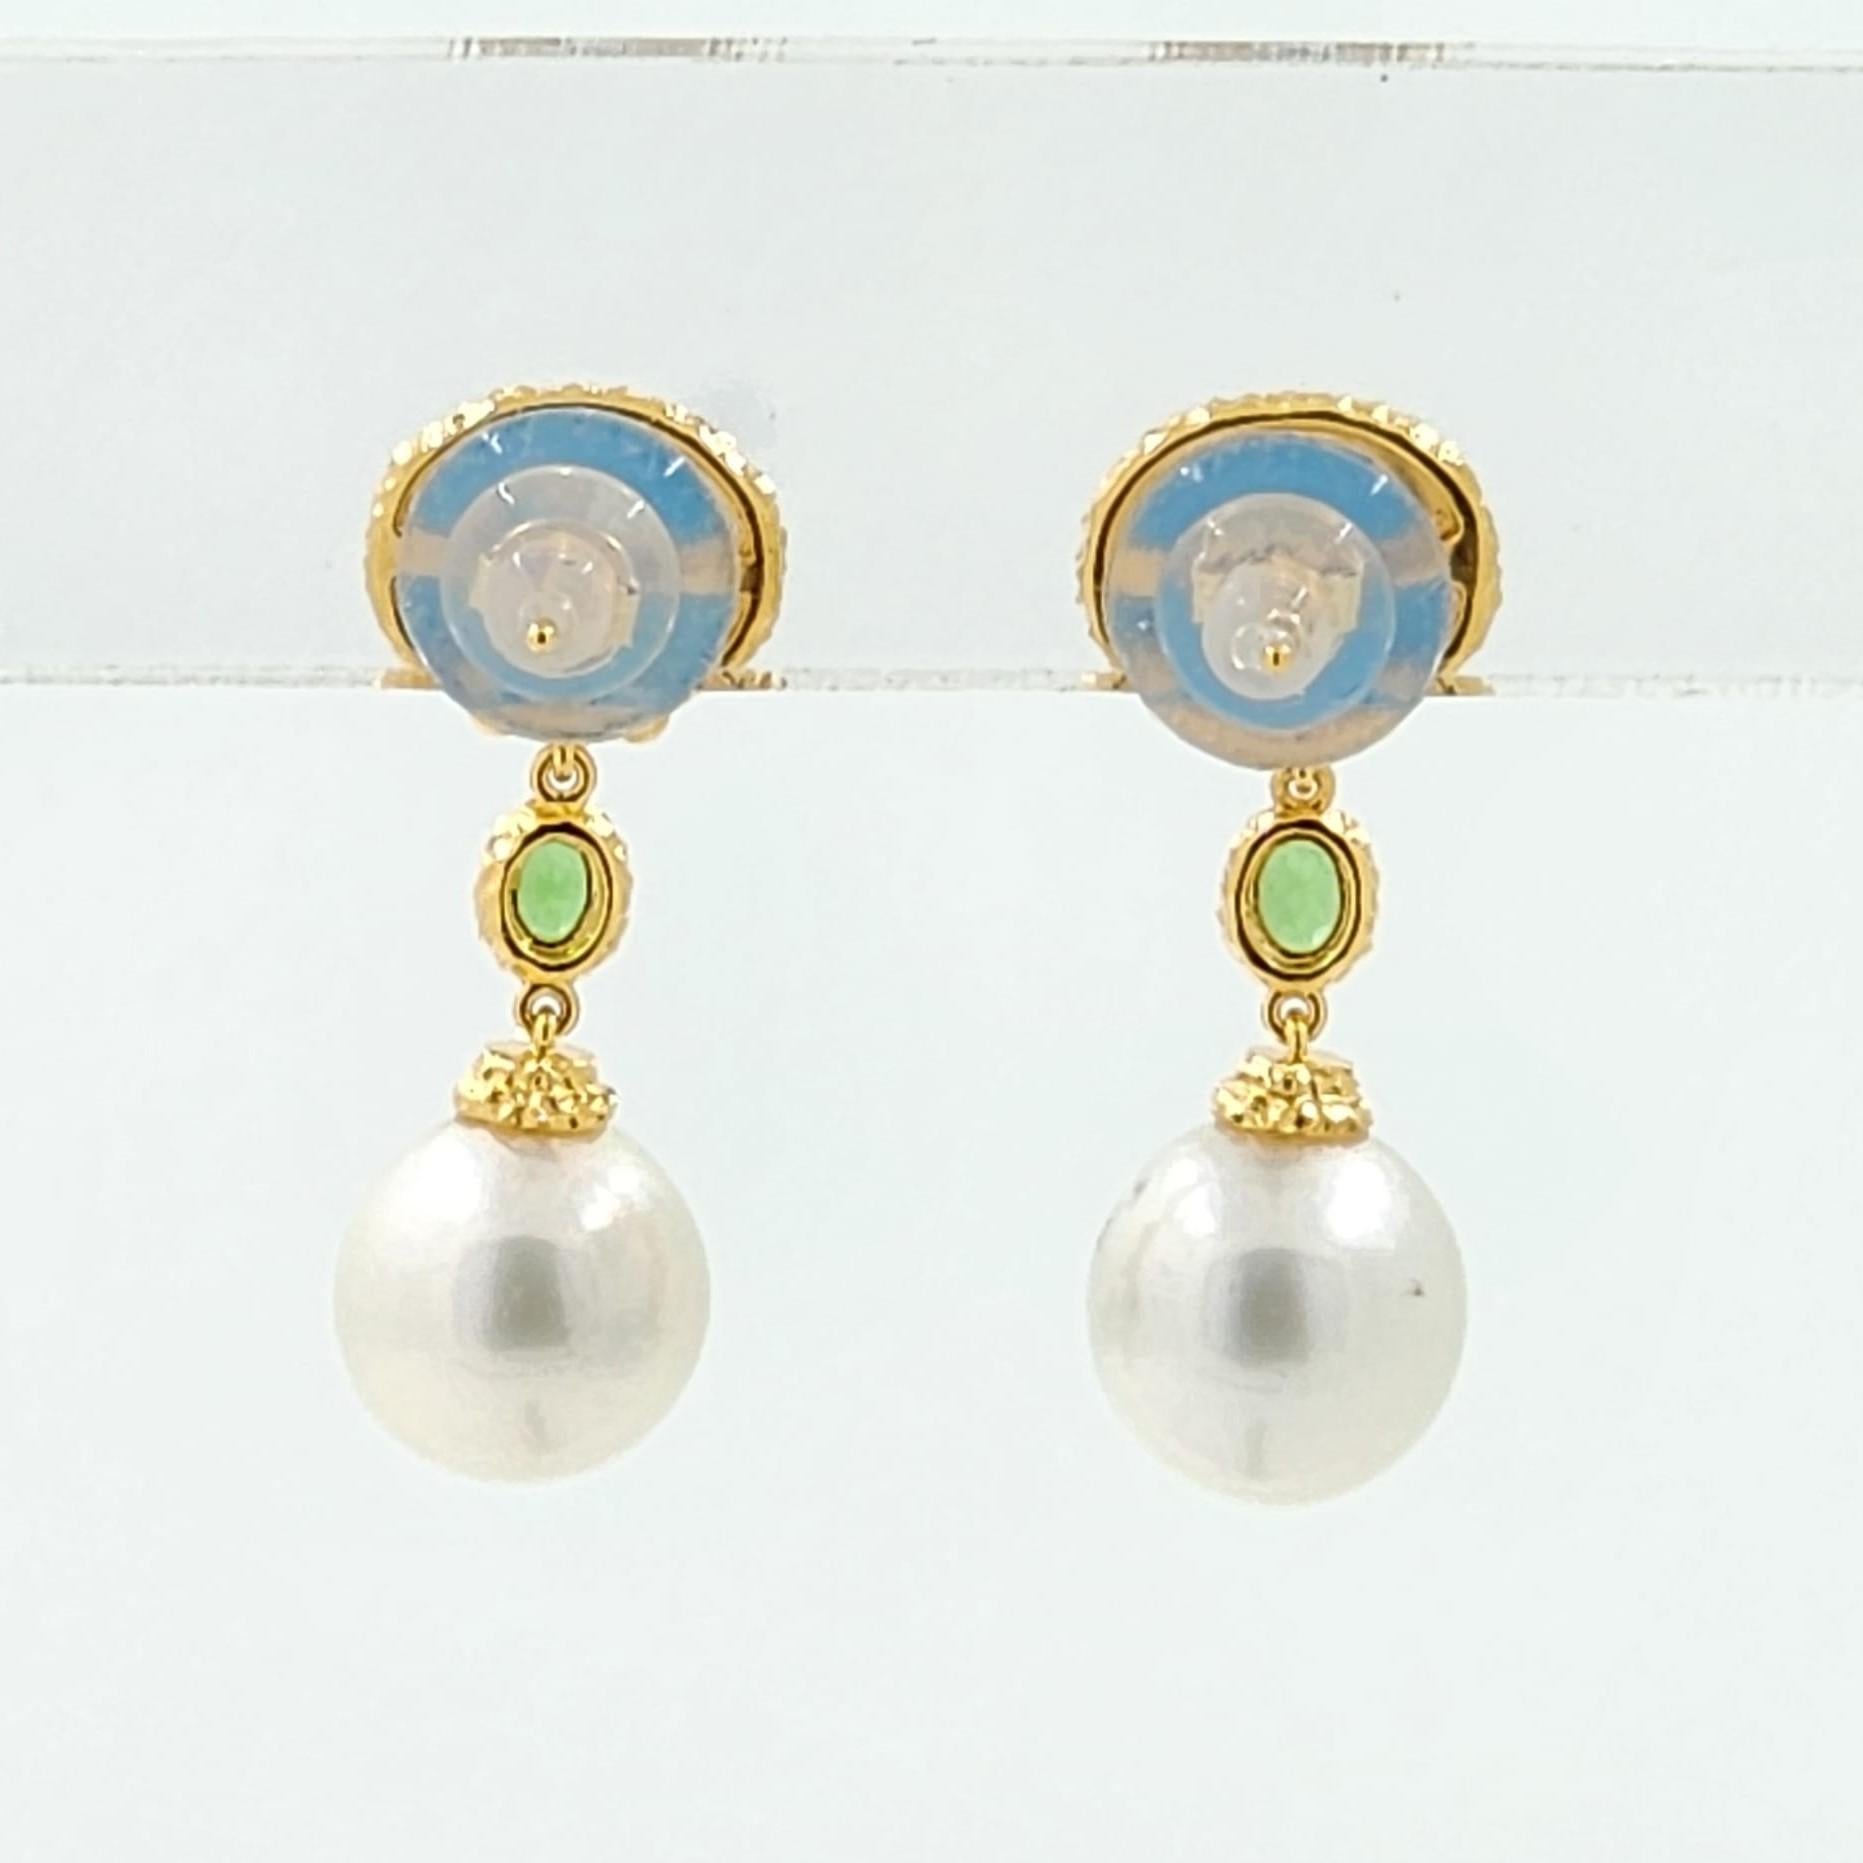 Bead South Sea Pearl Turquoise Drop Earrings in 18K Gold Vermeil Sterling Silver